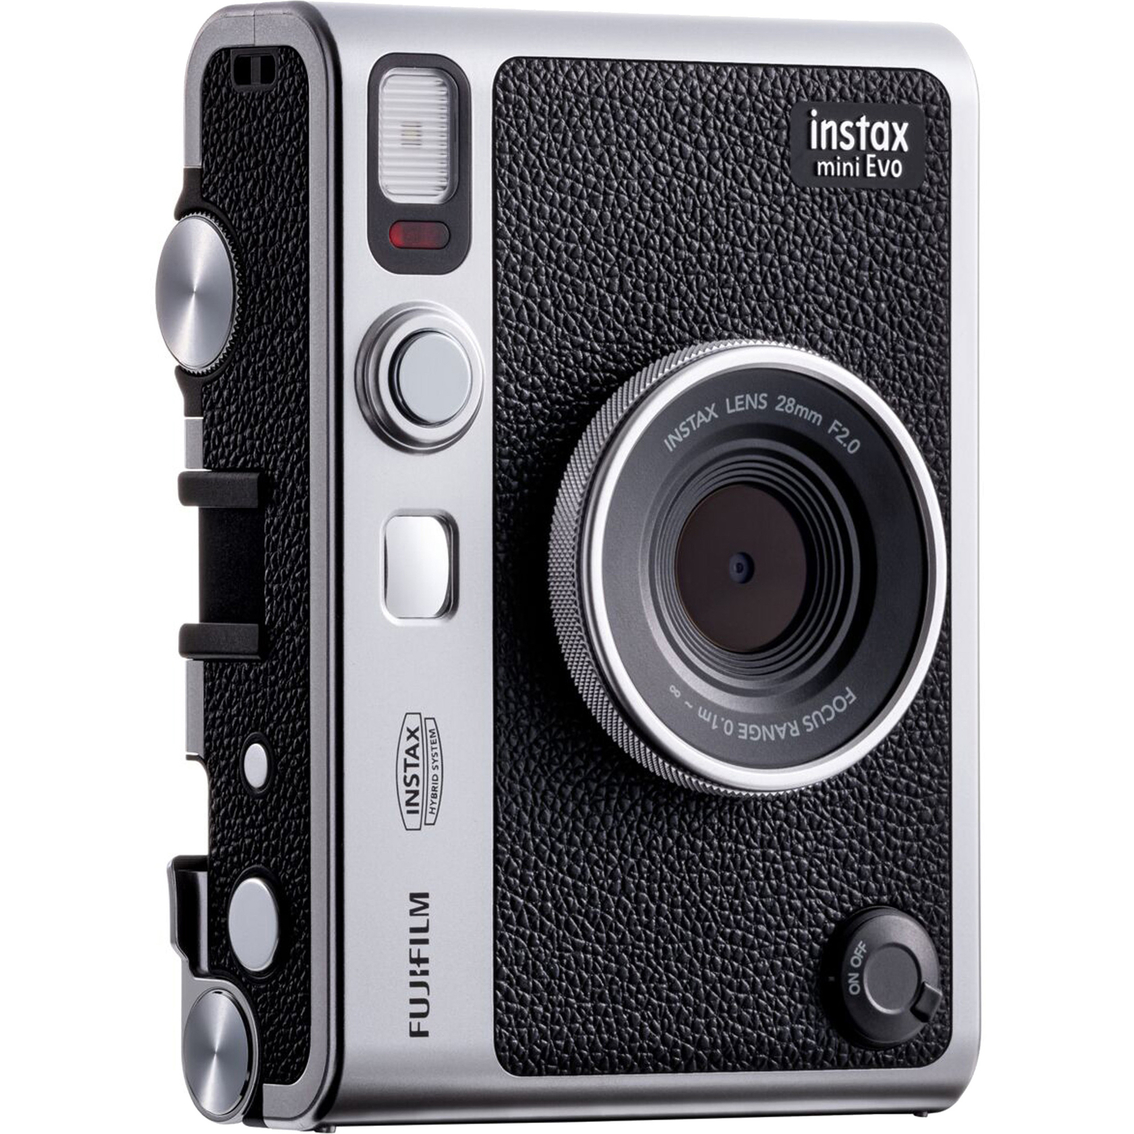 Fujifilm Instax Mini Evo Camera, Black - Image 3 of 7